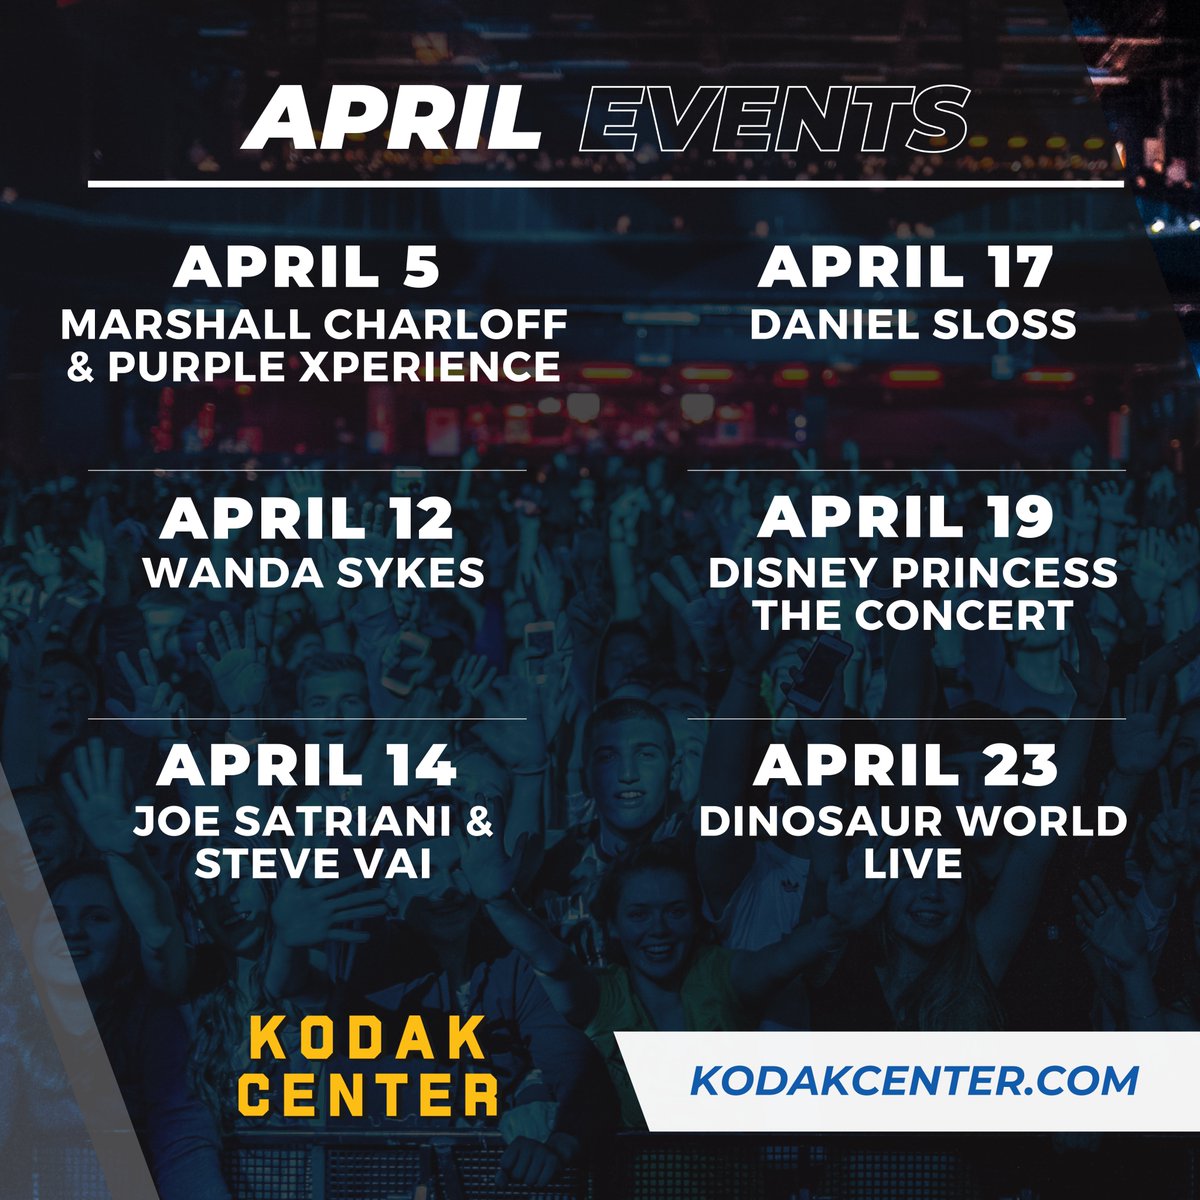 Happy April! 🌷

Info & tickets at KodakCenter.com and the Kodak Center Box Office (M-F 10am-2pm).

#kodakcenter #rocevents #thingstodoroc #visitroc